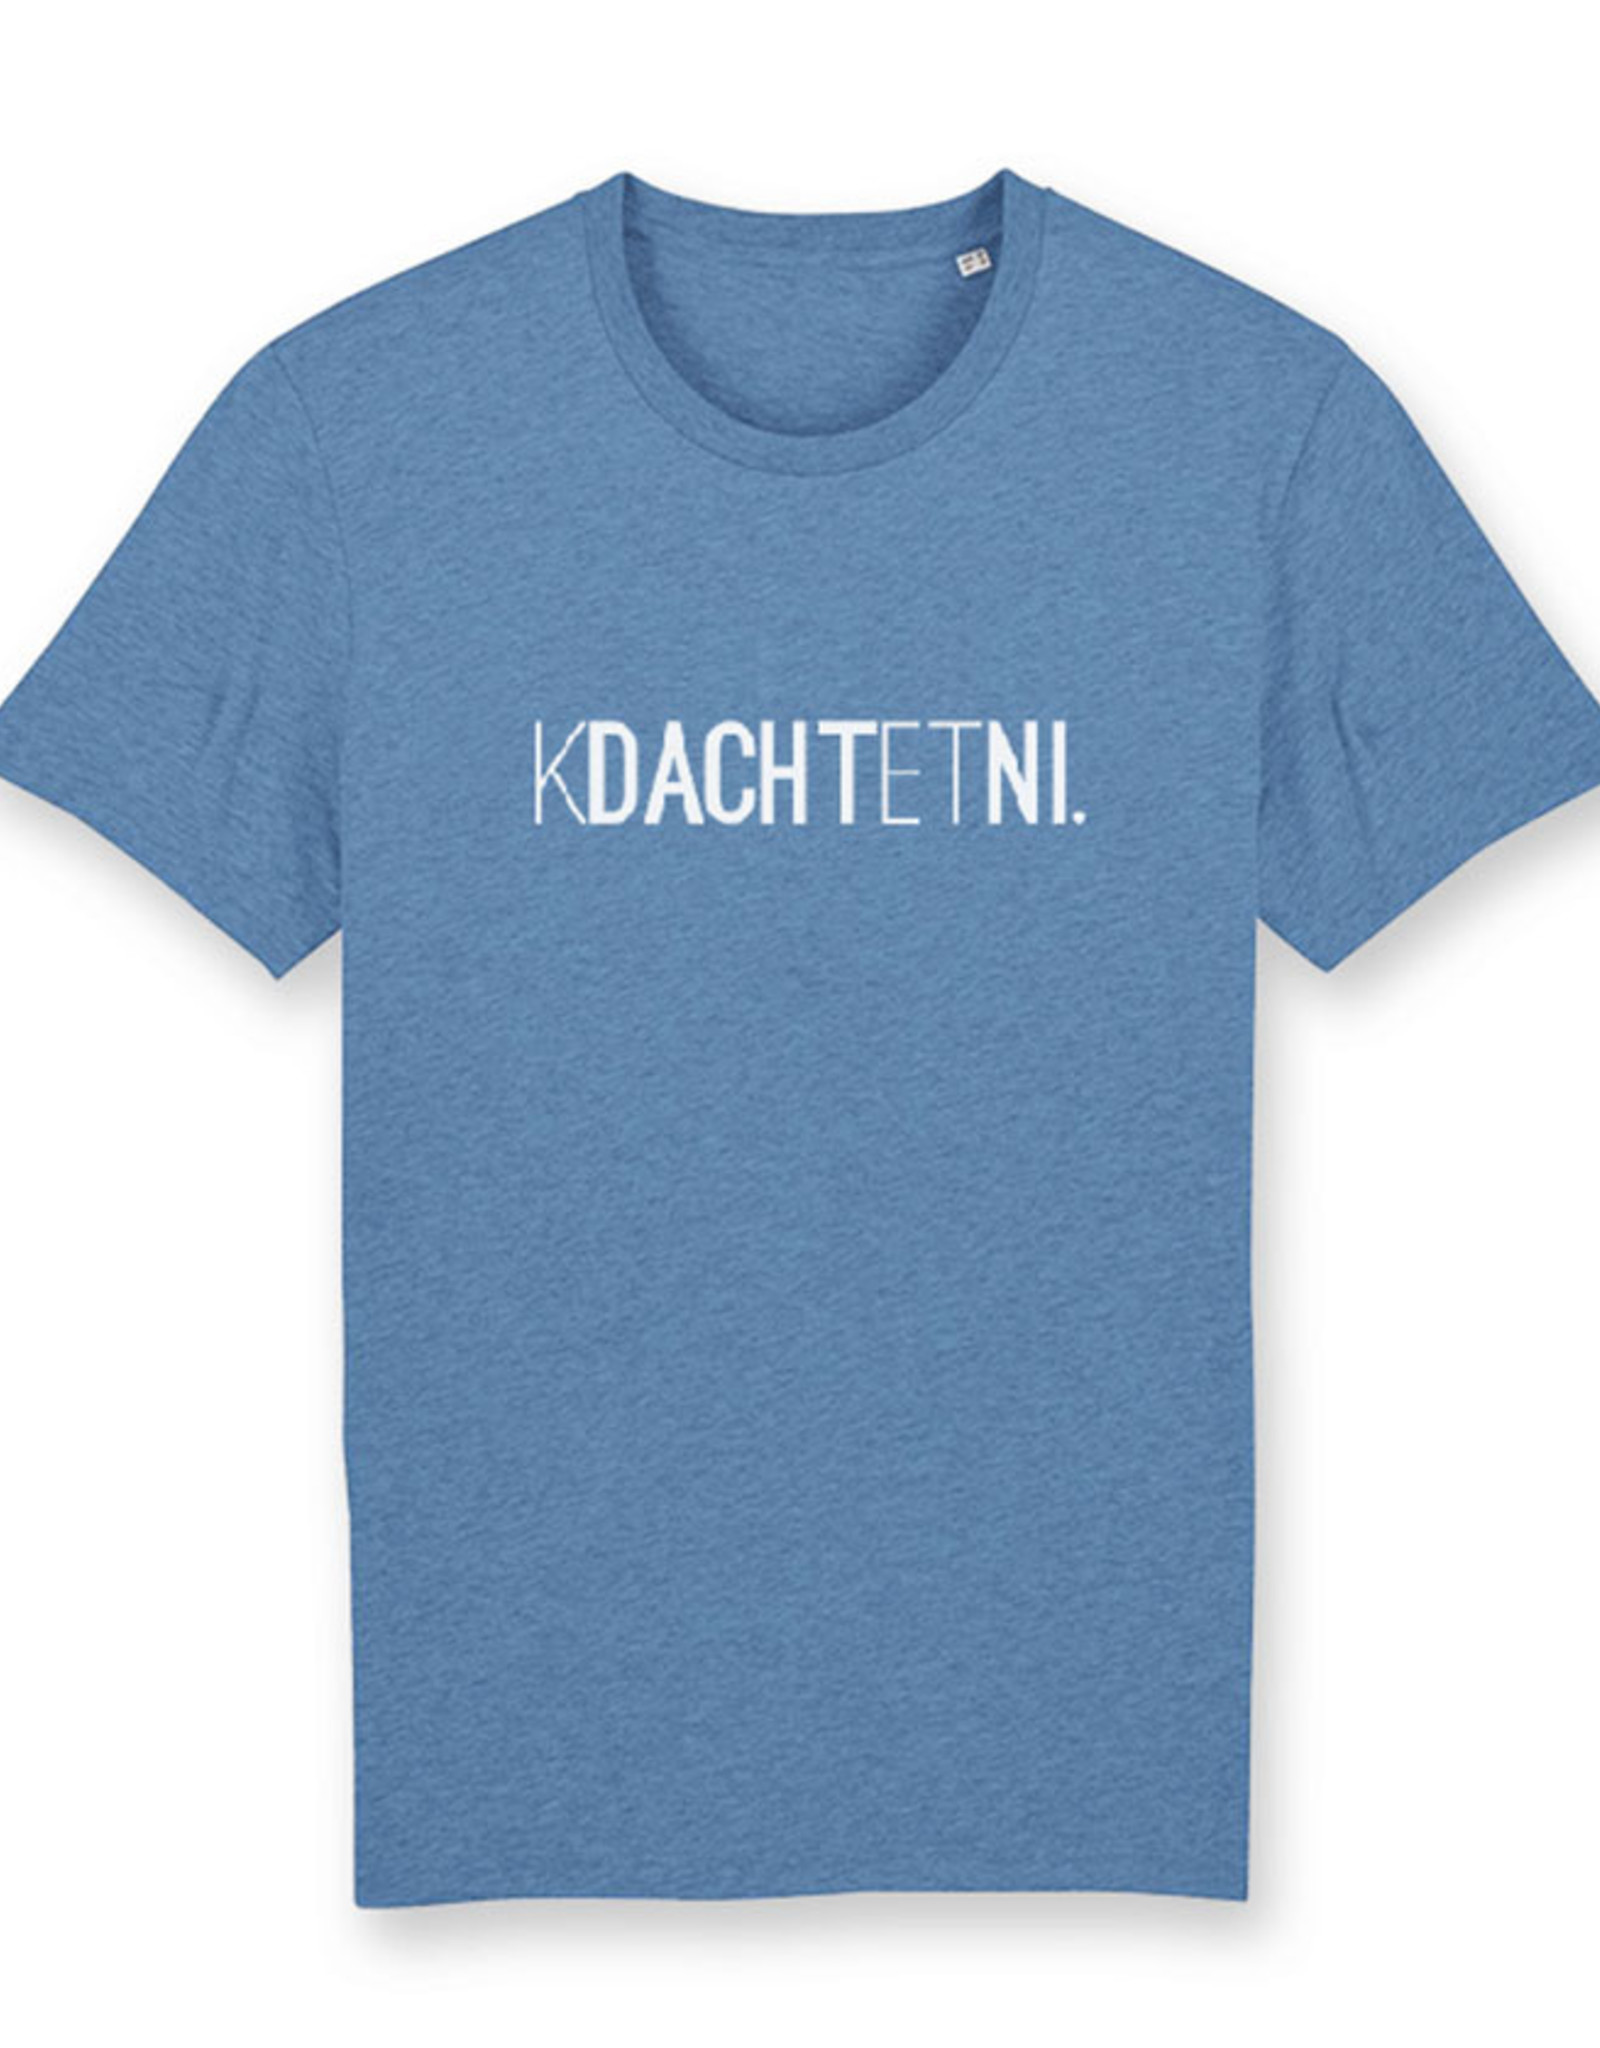 Kleir T-Shirt Biokatoen KDACHTETNI-blauw